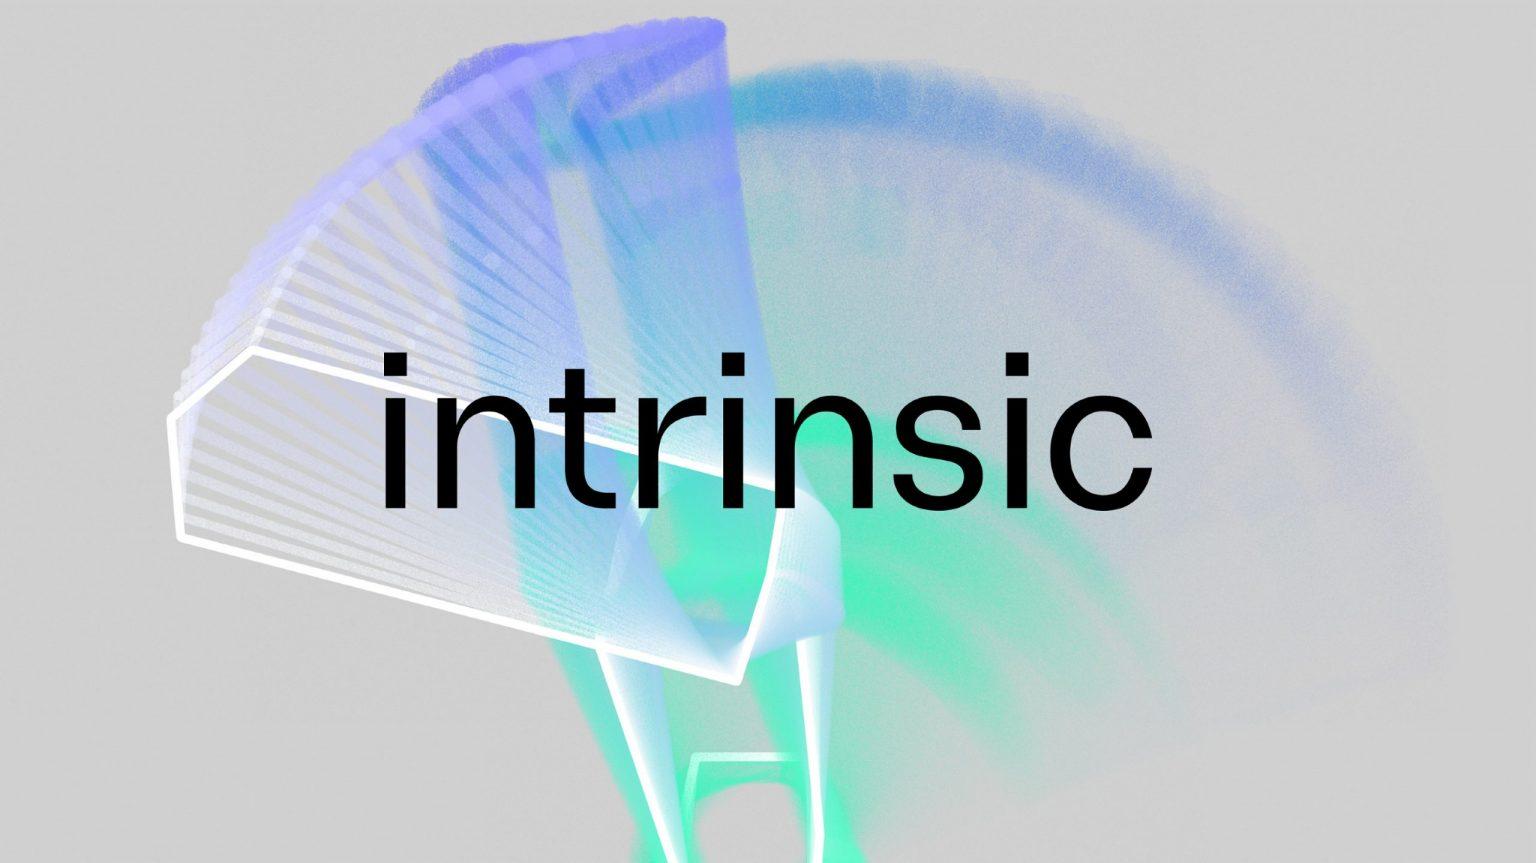 Alphabet to launch a new Robotics Company called Intrinsic | ఇంట్రిన్సిక్ అనే కొత్త రోబోటిక్స్ కంపెనీని ప్రారంభించిన ఆల్ఫాబెట్. |_30.1